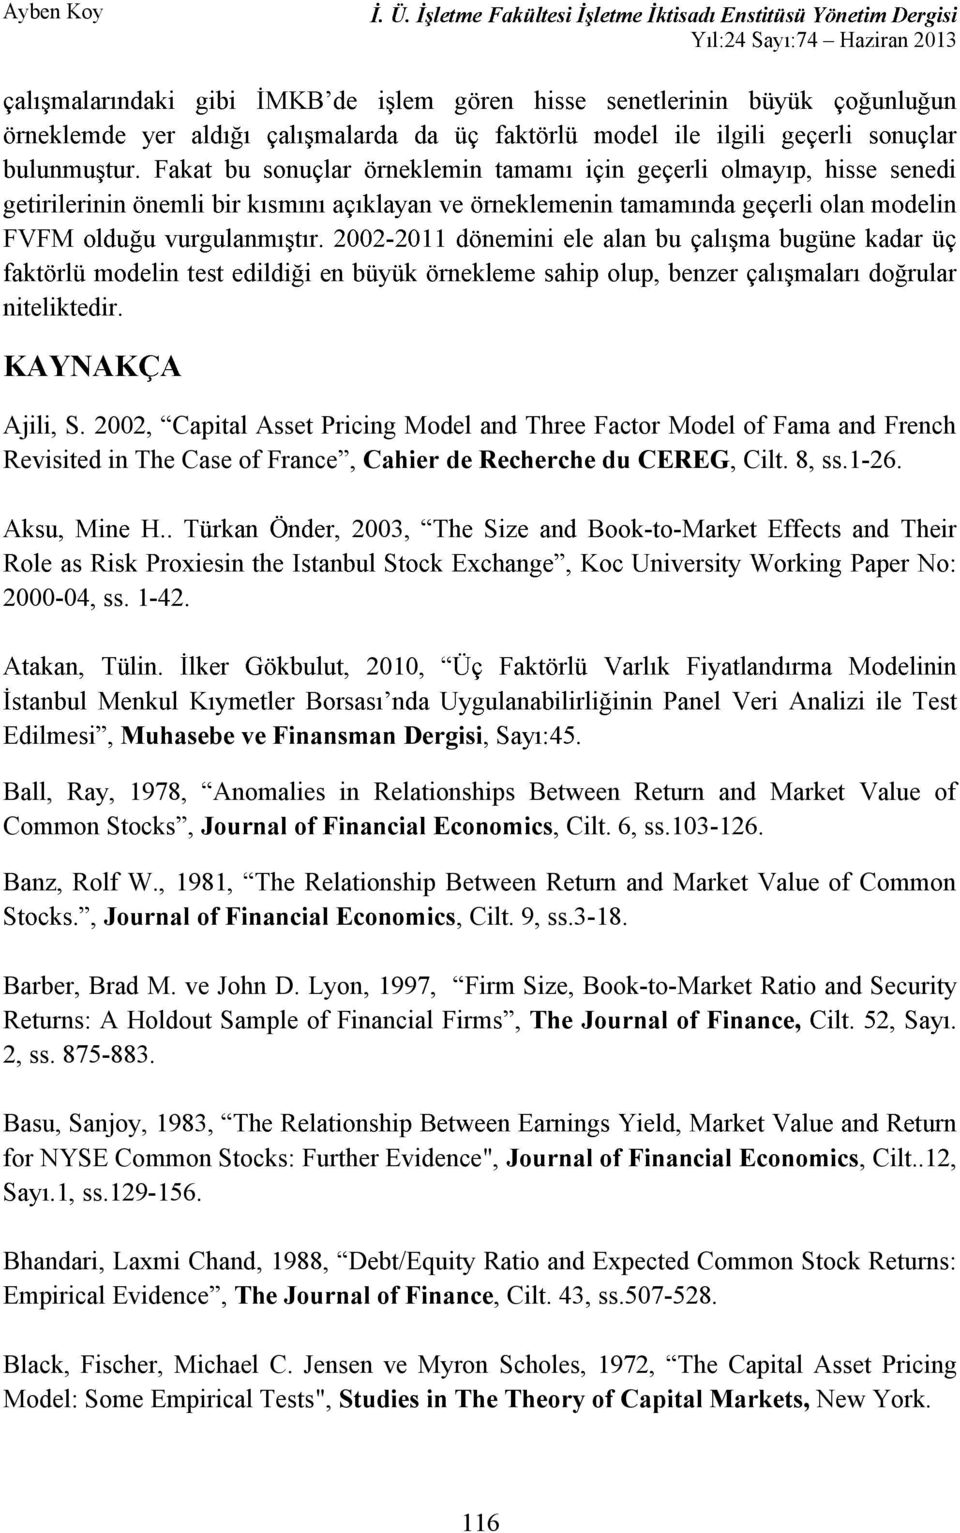 Financial Economics Cilt. 6 ss.103-126. Banz Rolf W. 1981 Relationship Between Return and Market Value of Common Journal of Financial Economics Cilt. 9 ss.3-18. Barber Brad M. ve John D.